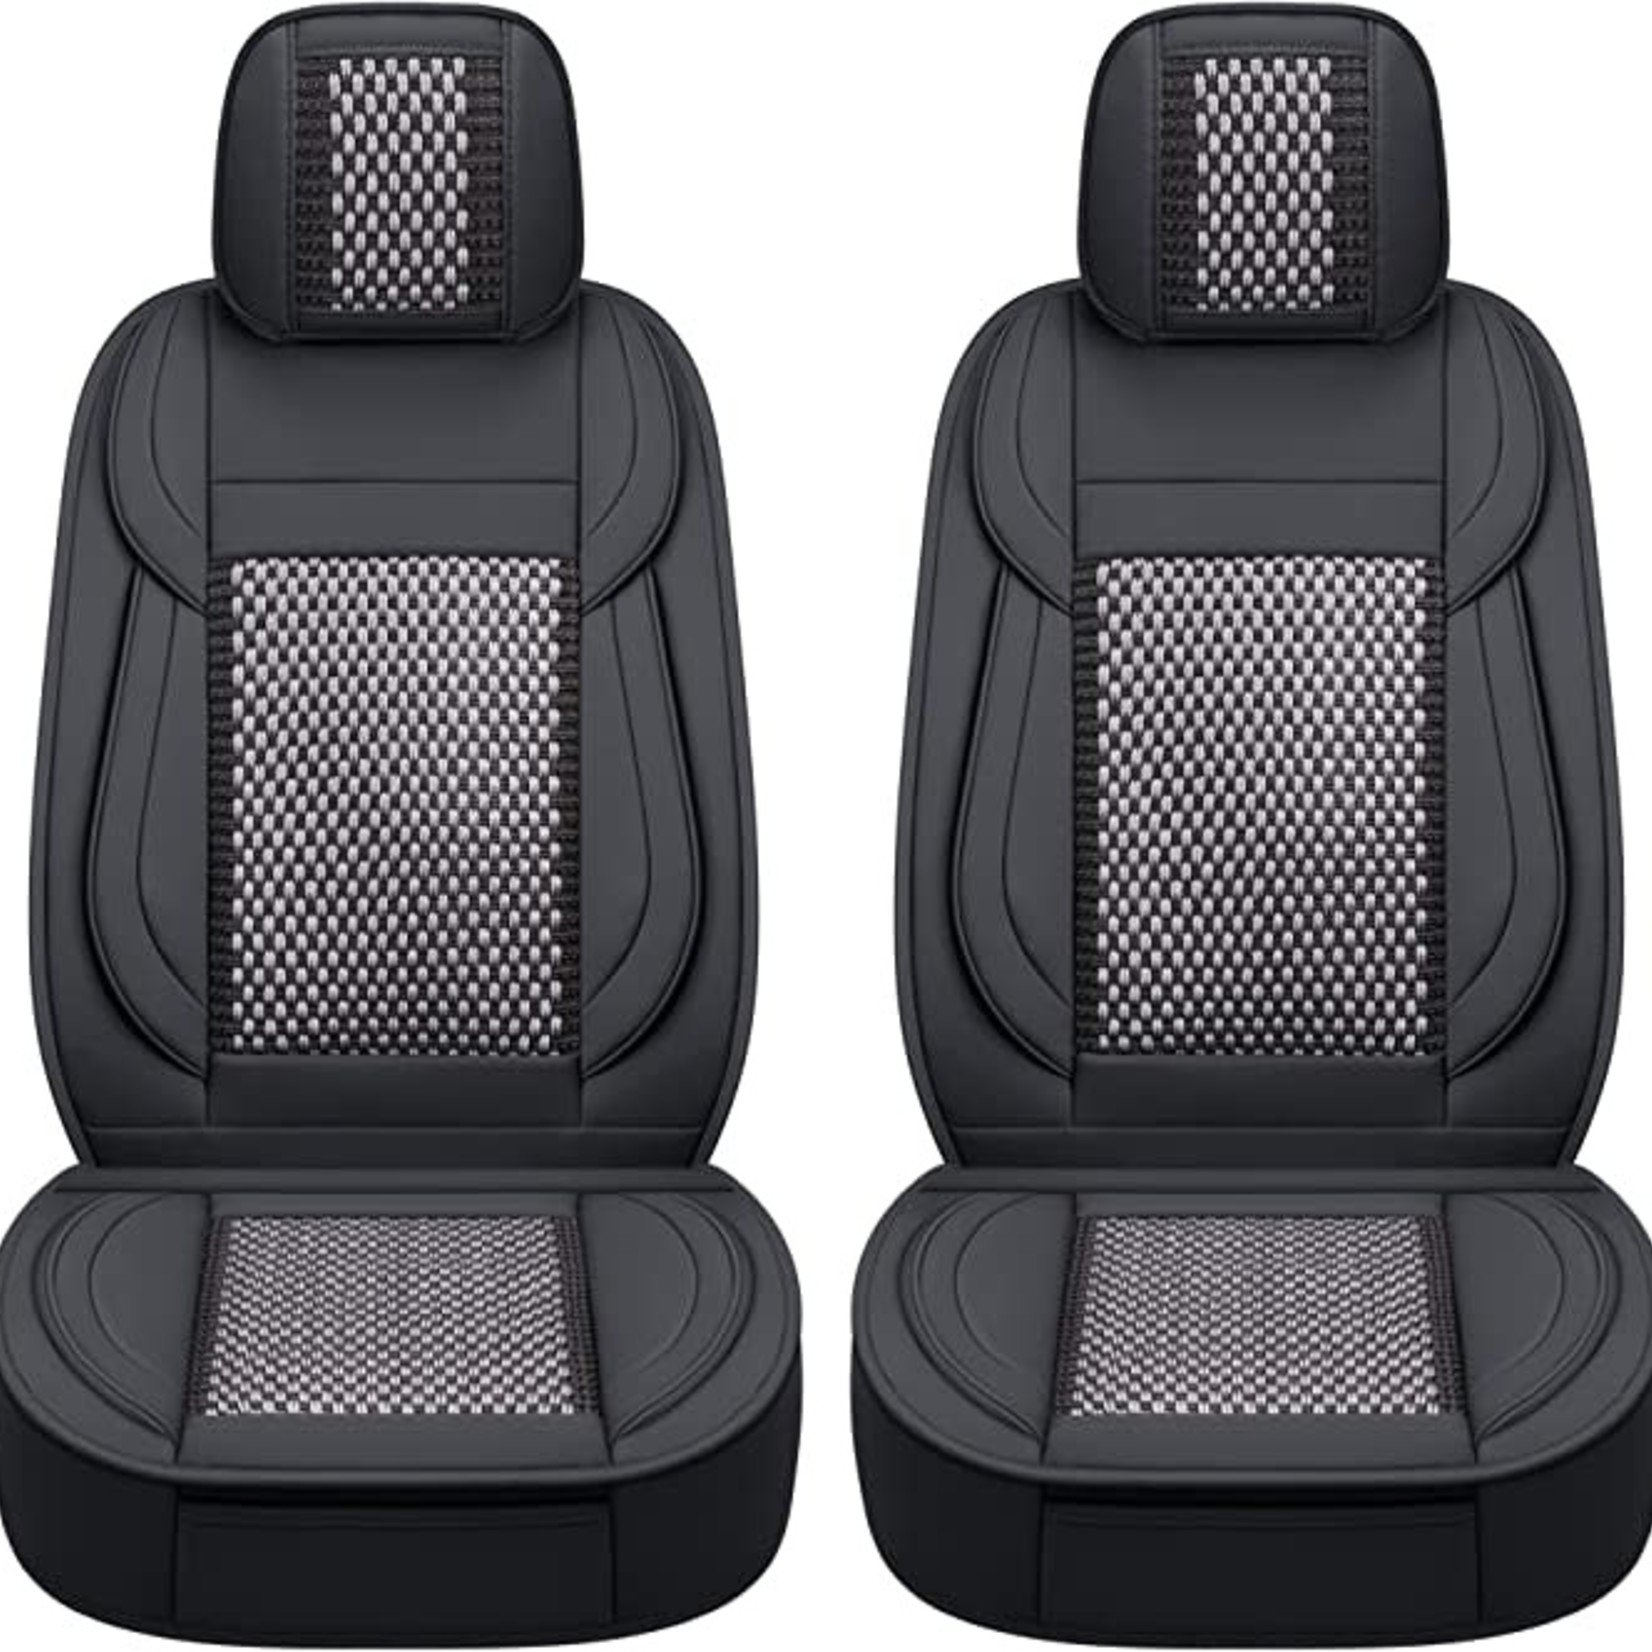 Lingvido Leather Car Seat Covers 5 Pc Set - Ice Gray/Black